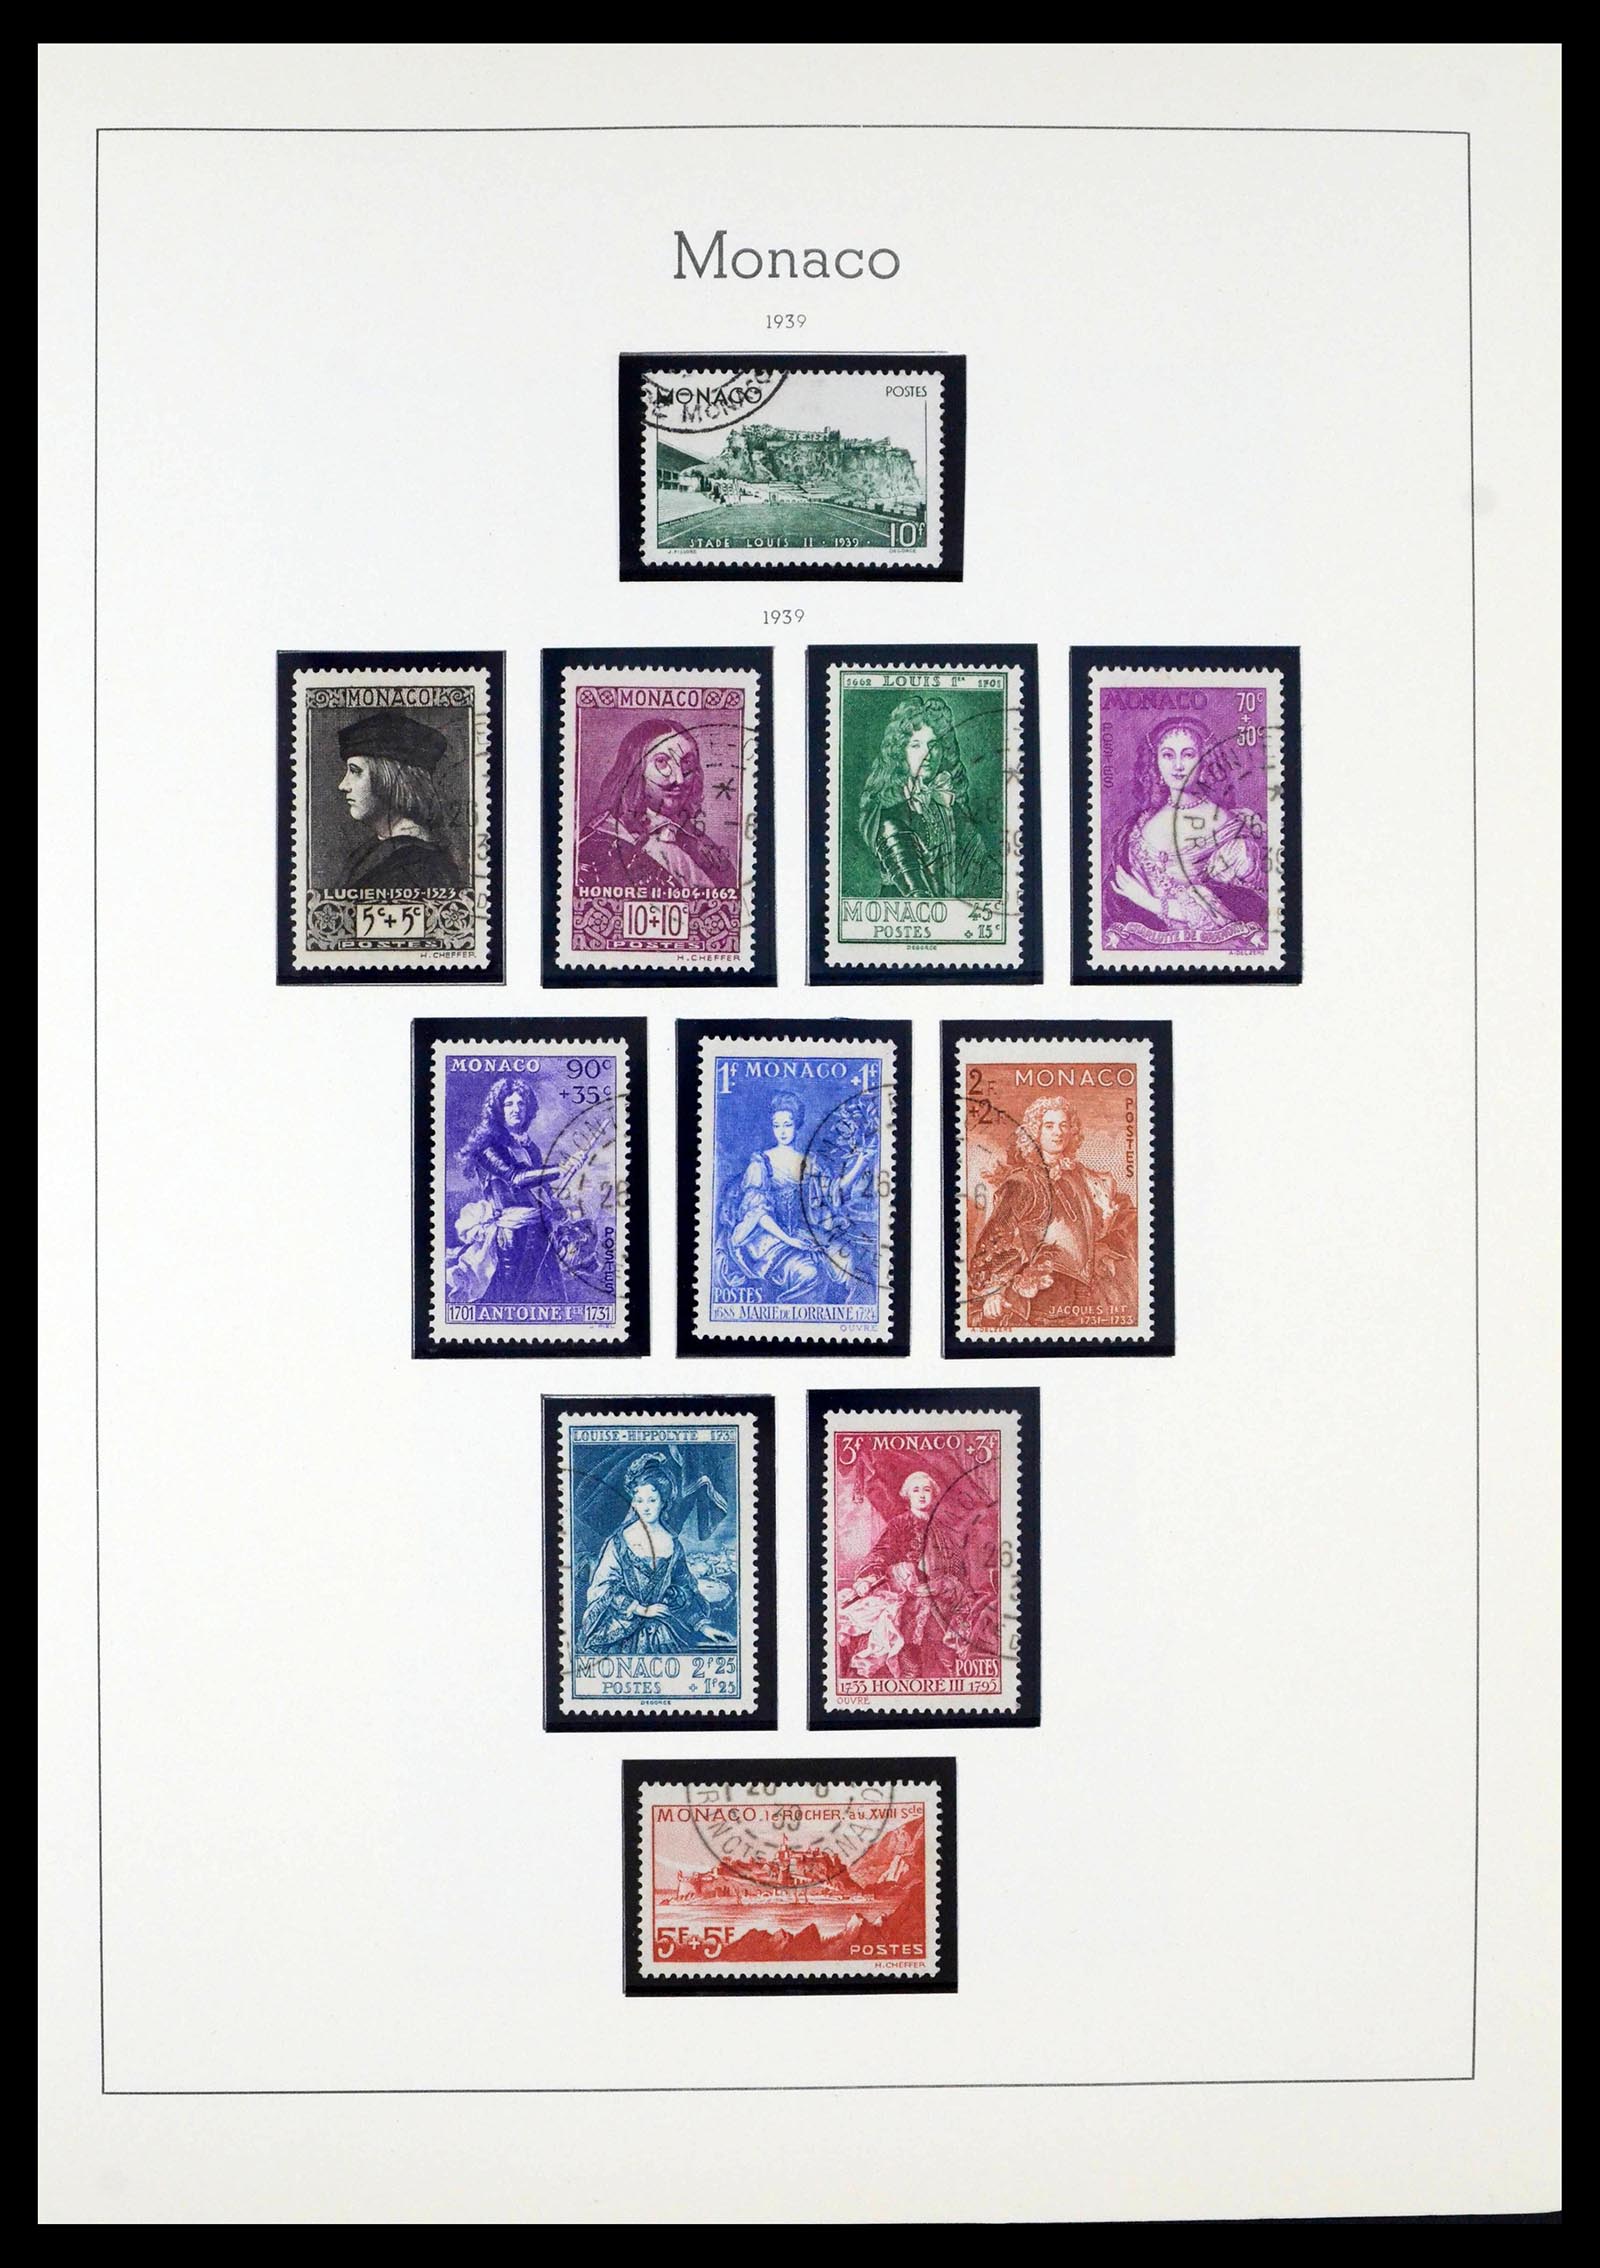 39392 0015 - Stamp collection 39392 Monaco 1885-1999.